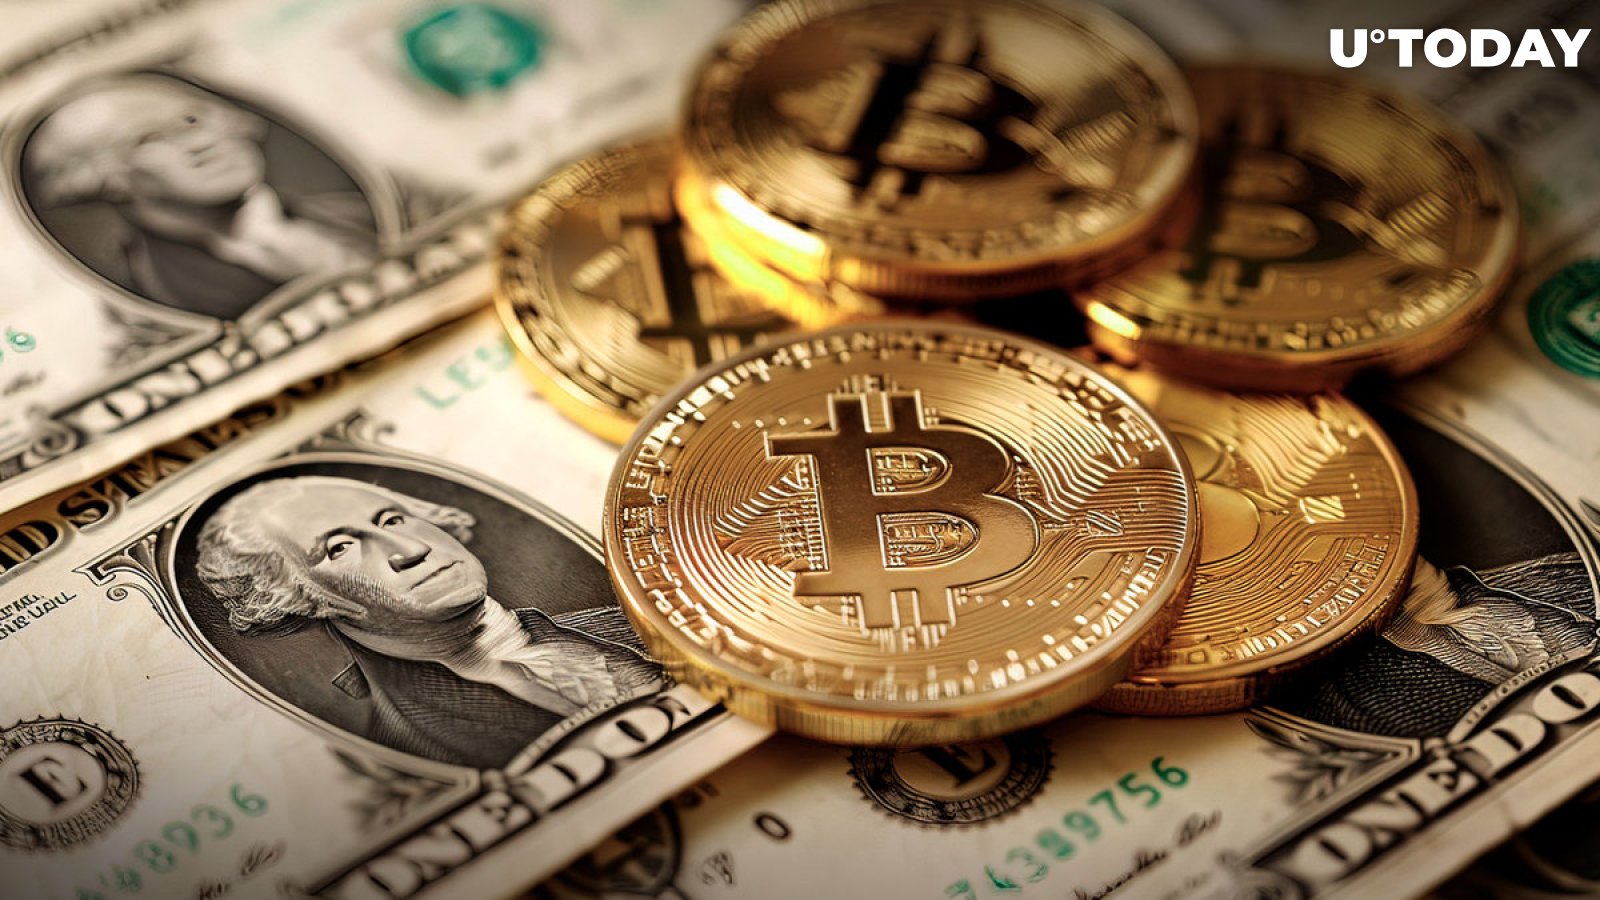 $2 Billion Worth of Bitcoin Just Transferred: What Happened?